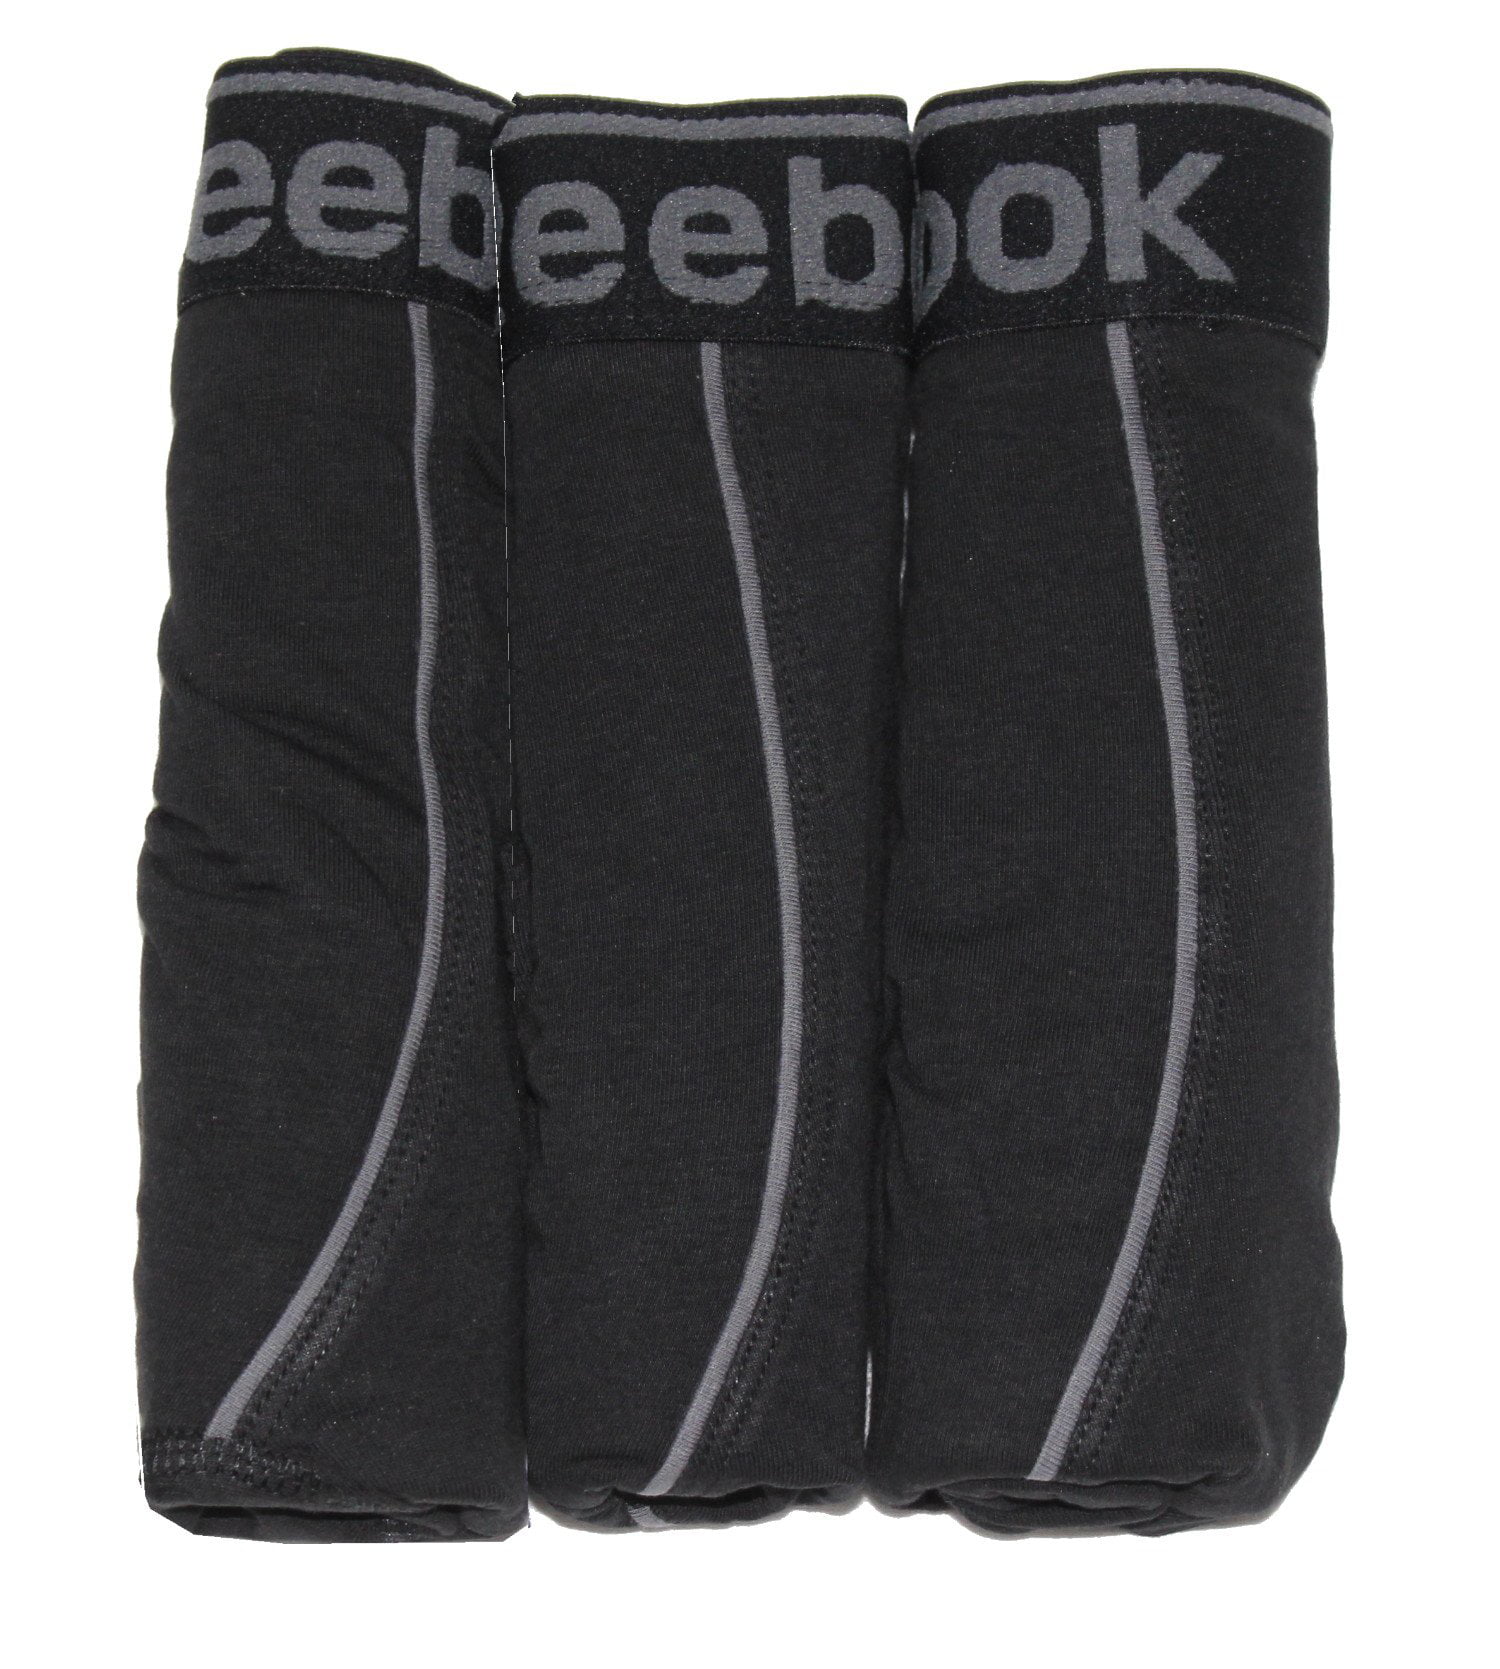 reebok men's 3 pack stretch boxer briefs